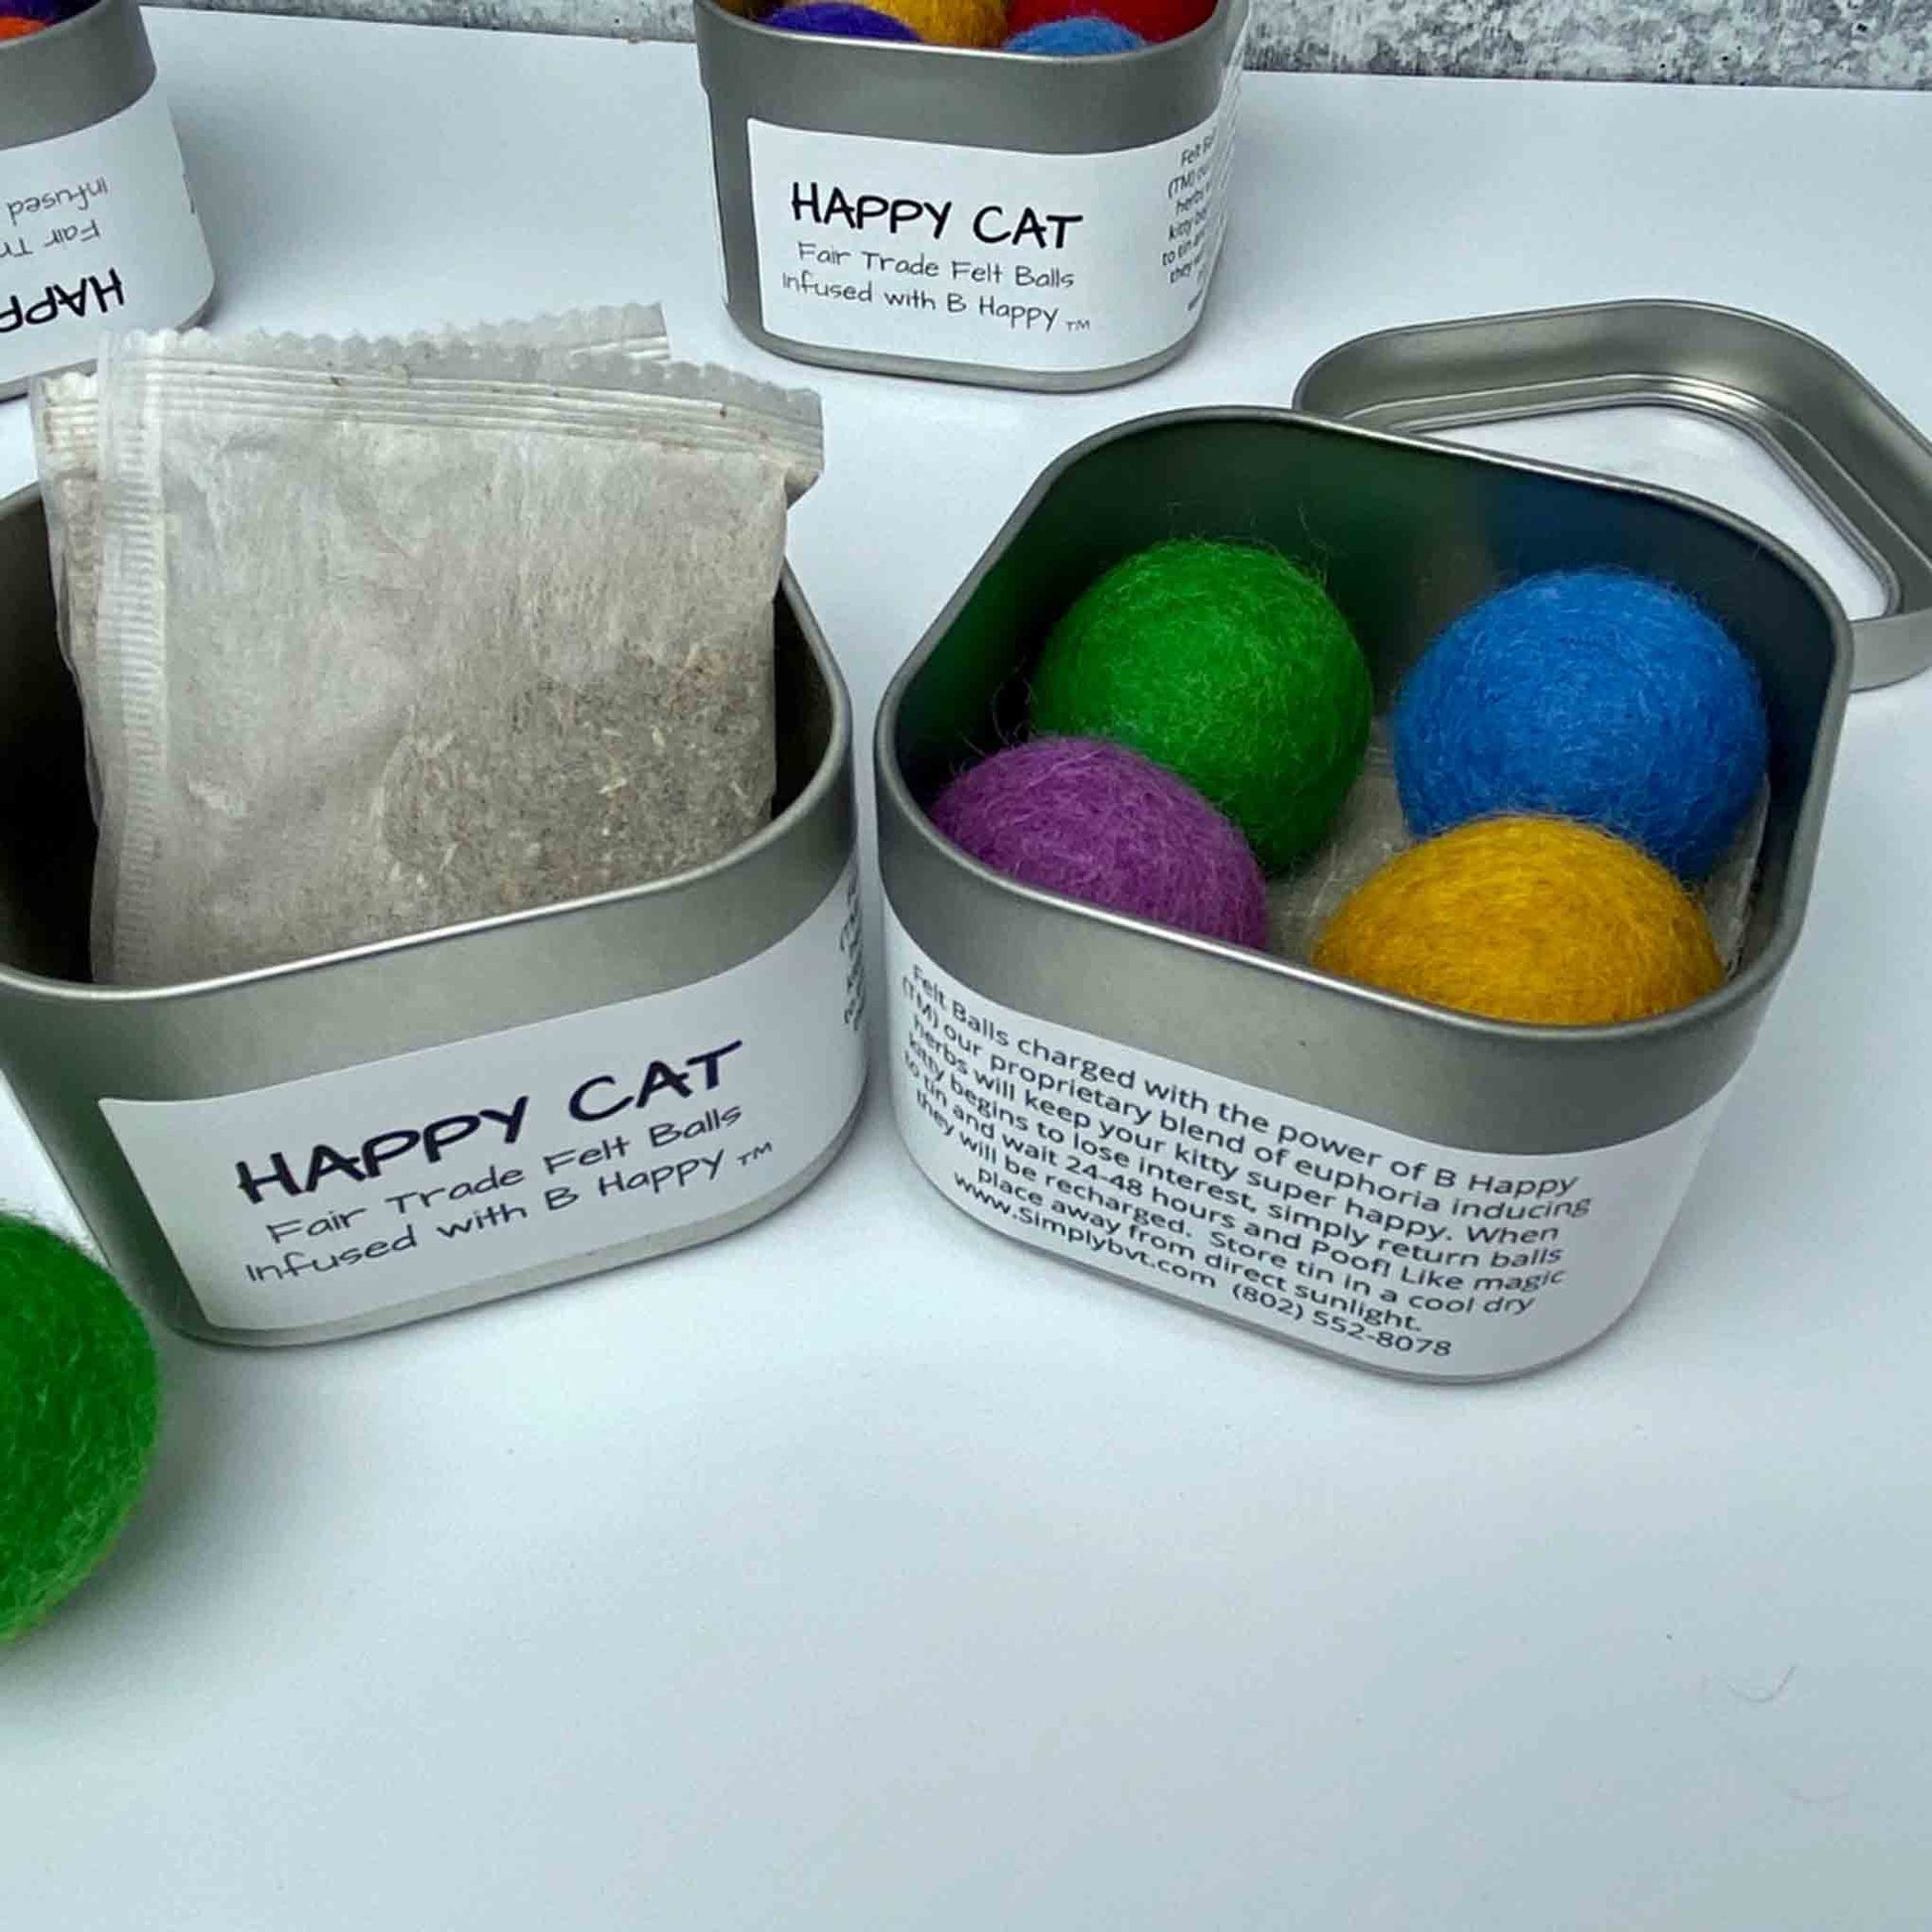 Happy Cat Fair Trade Felt Balls catnip - Floyd & Fleet